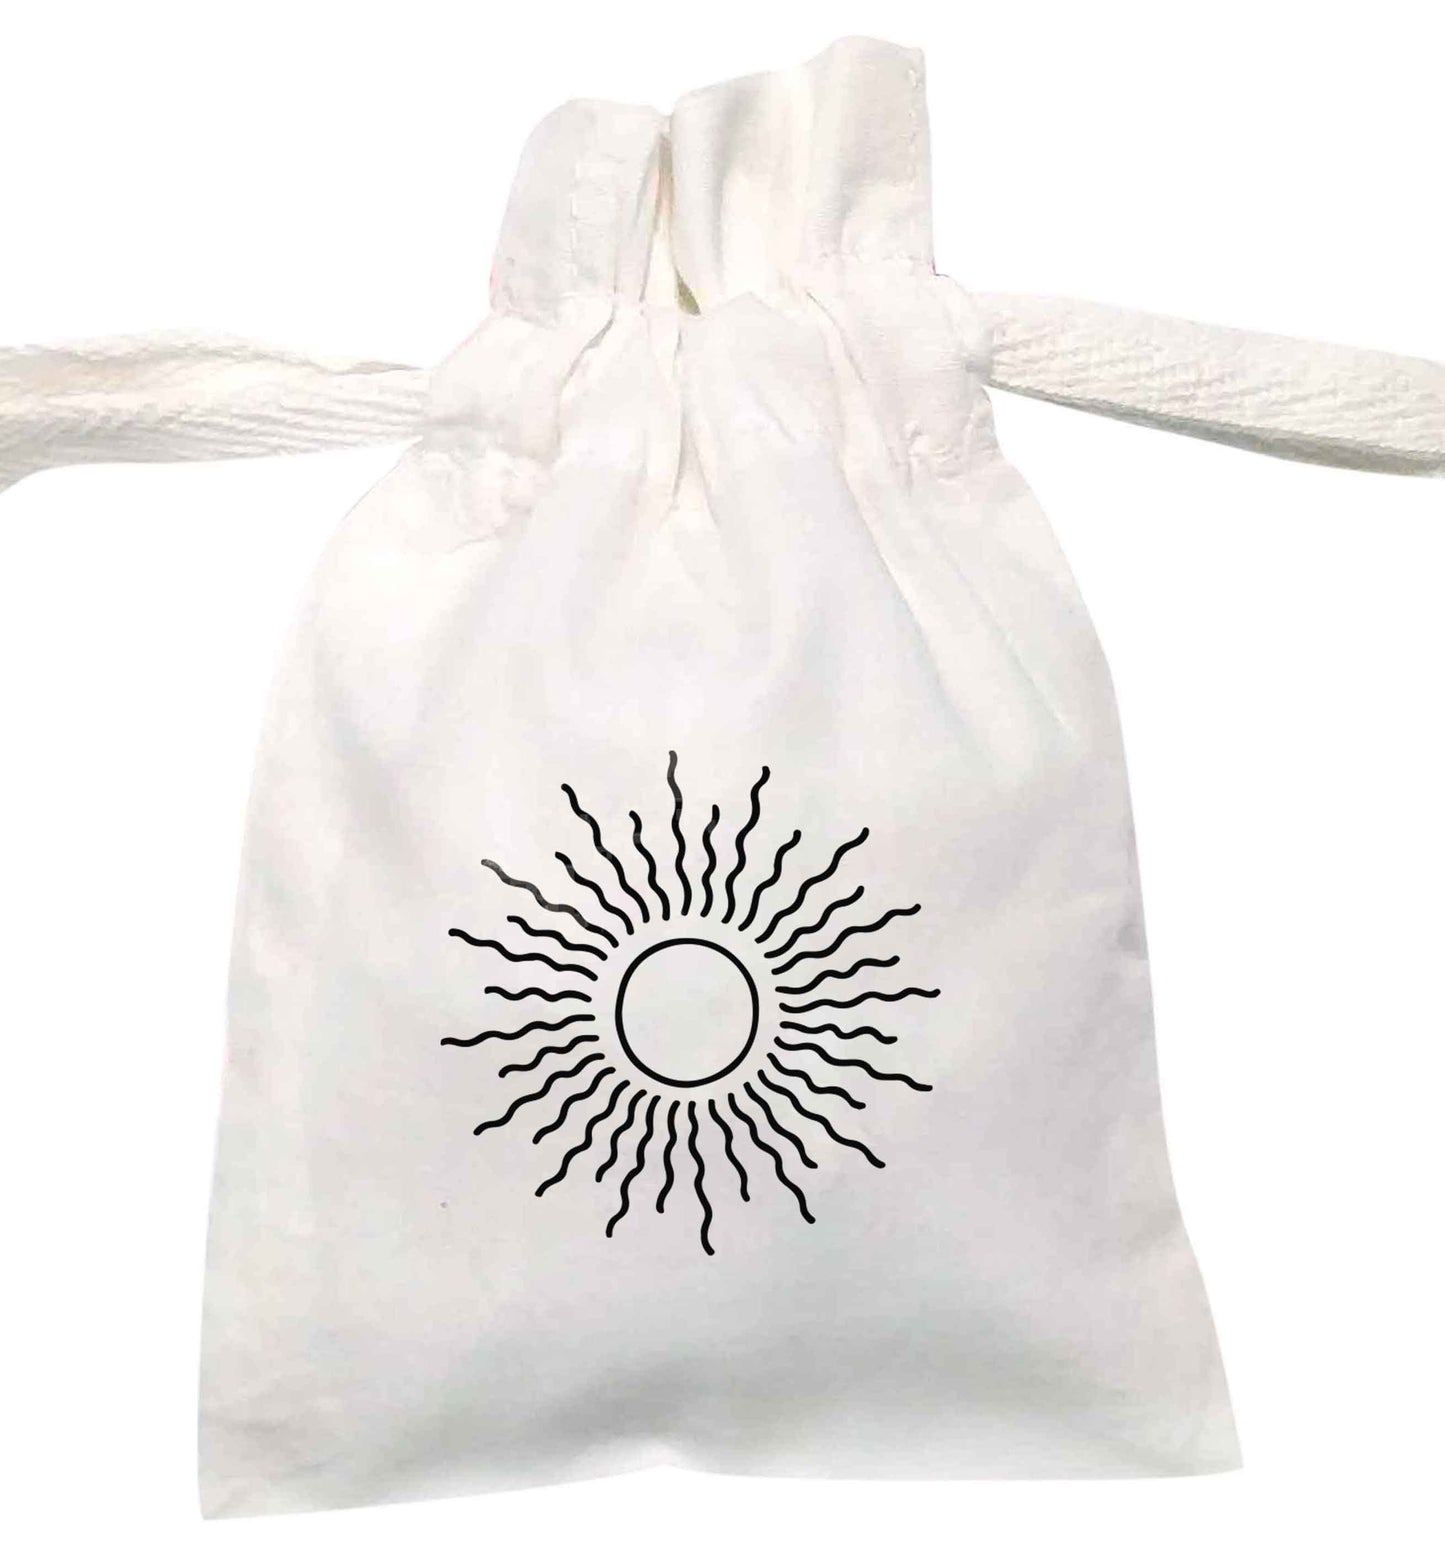 Sun illustration | XS - L | Pouch / Drawstring bag / Sack | Organic Cotton | Bulk discounts available!